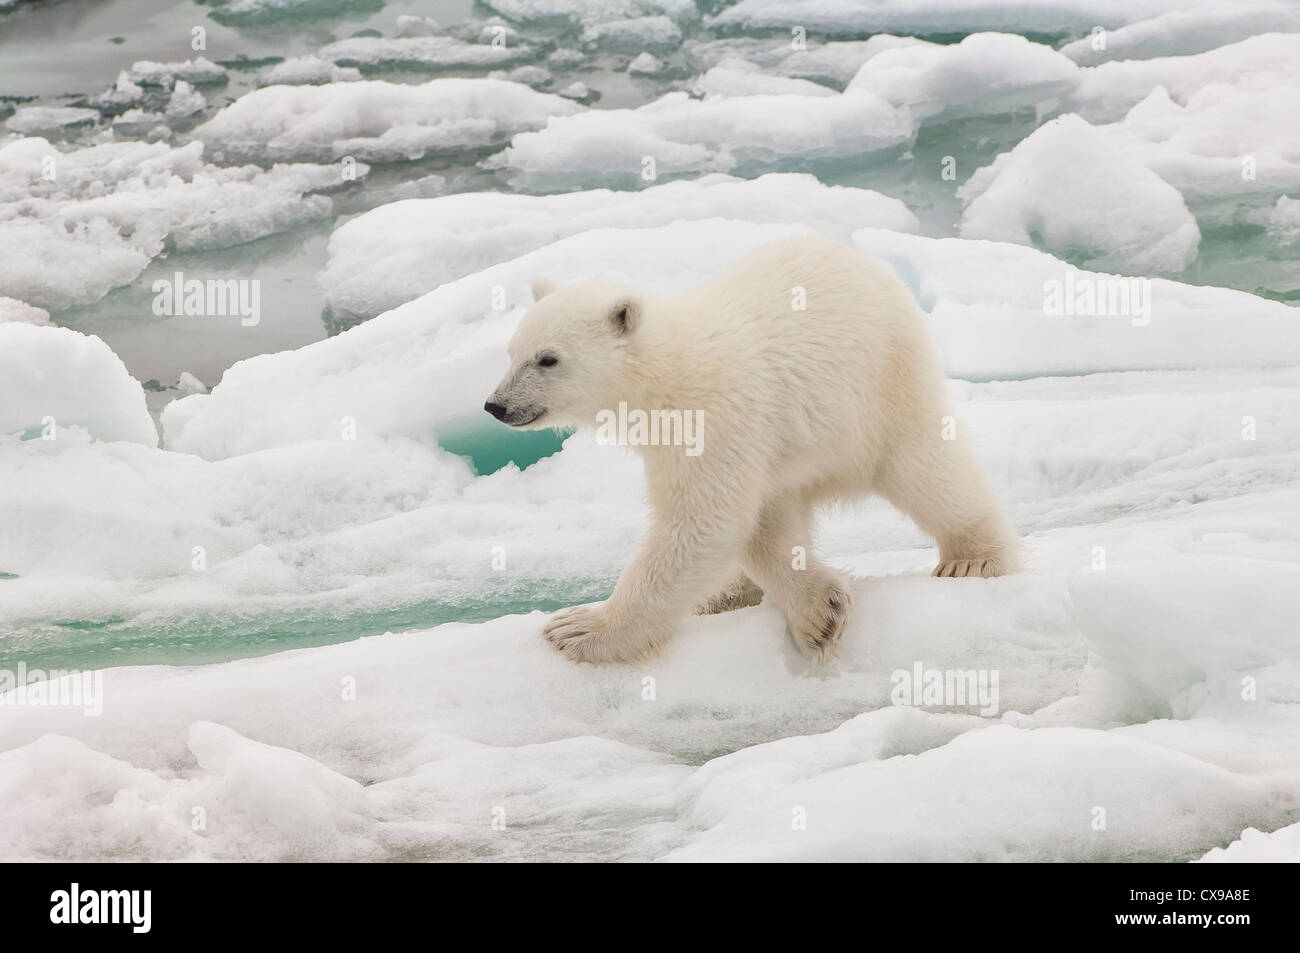 Polar bear cub (Ursus maritimus) on pack ice, Svalbard Archipelago, Barents Sea, Norway Stock Photo